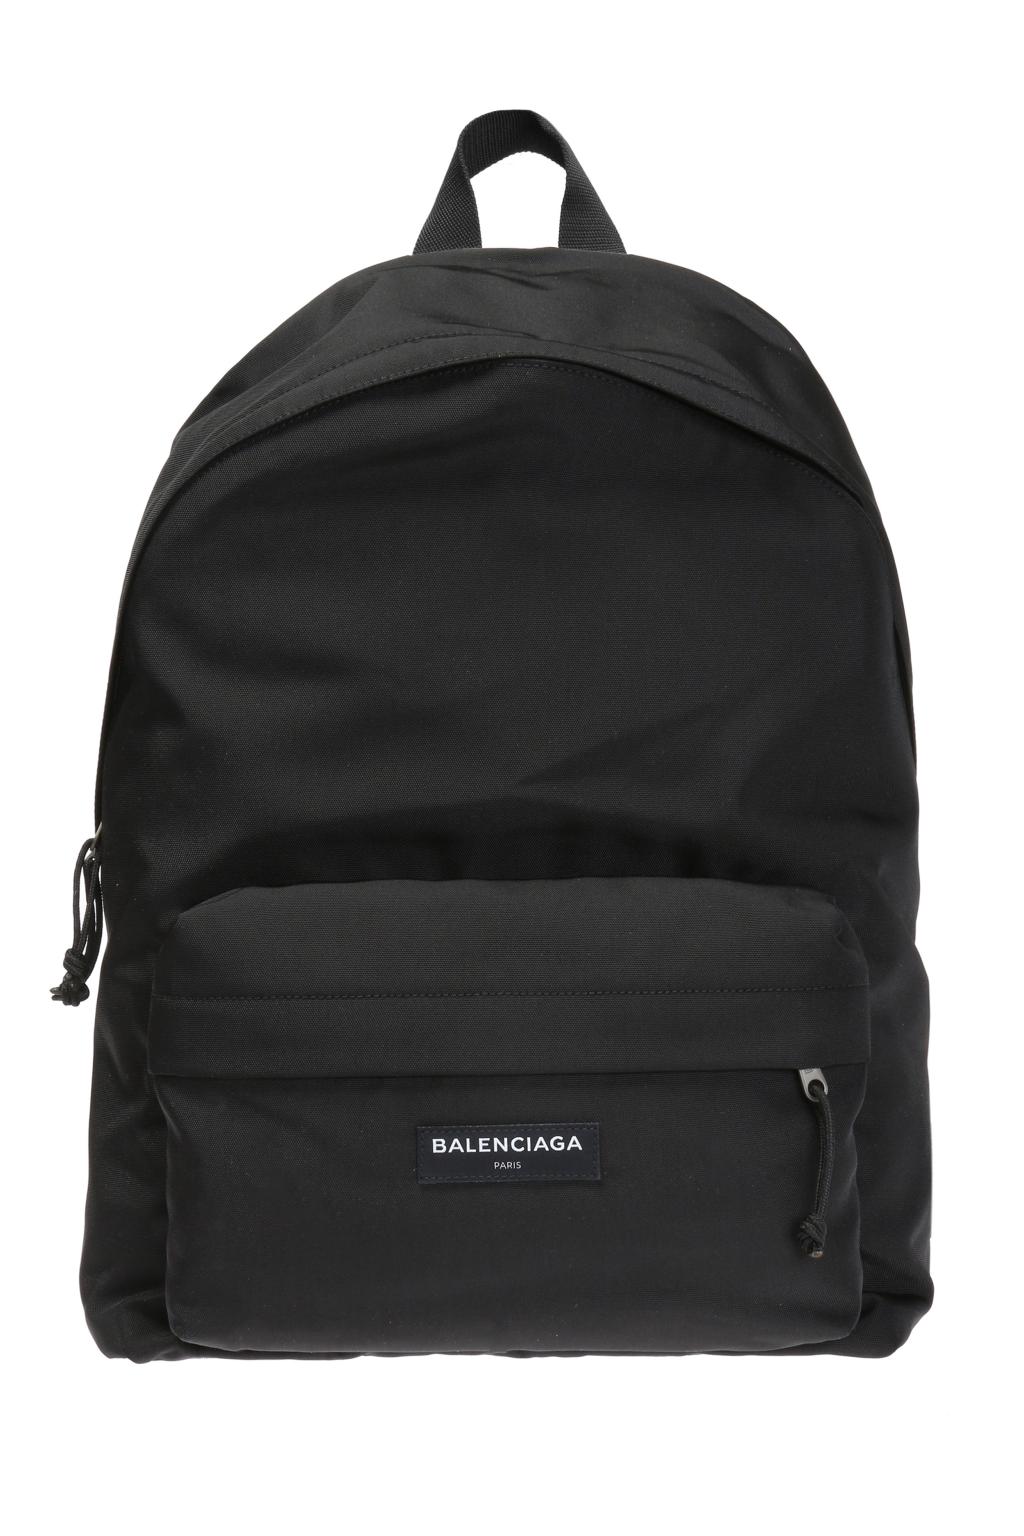 Balenciaga 'Explorer' backpack | Men's Bags | Vitkac